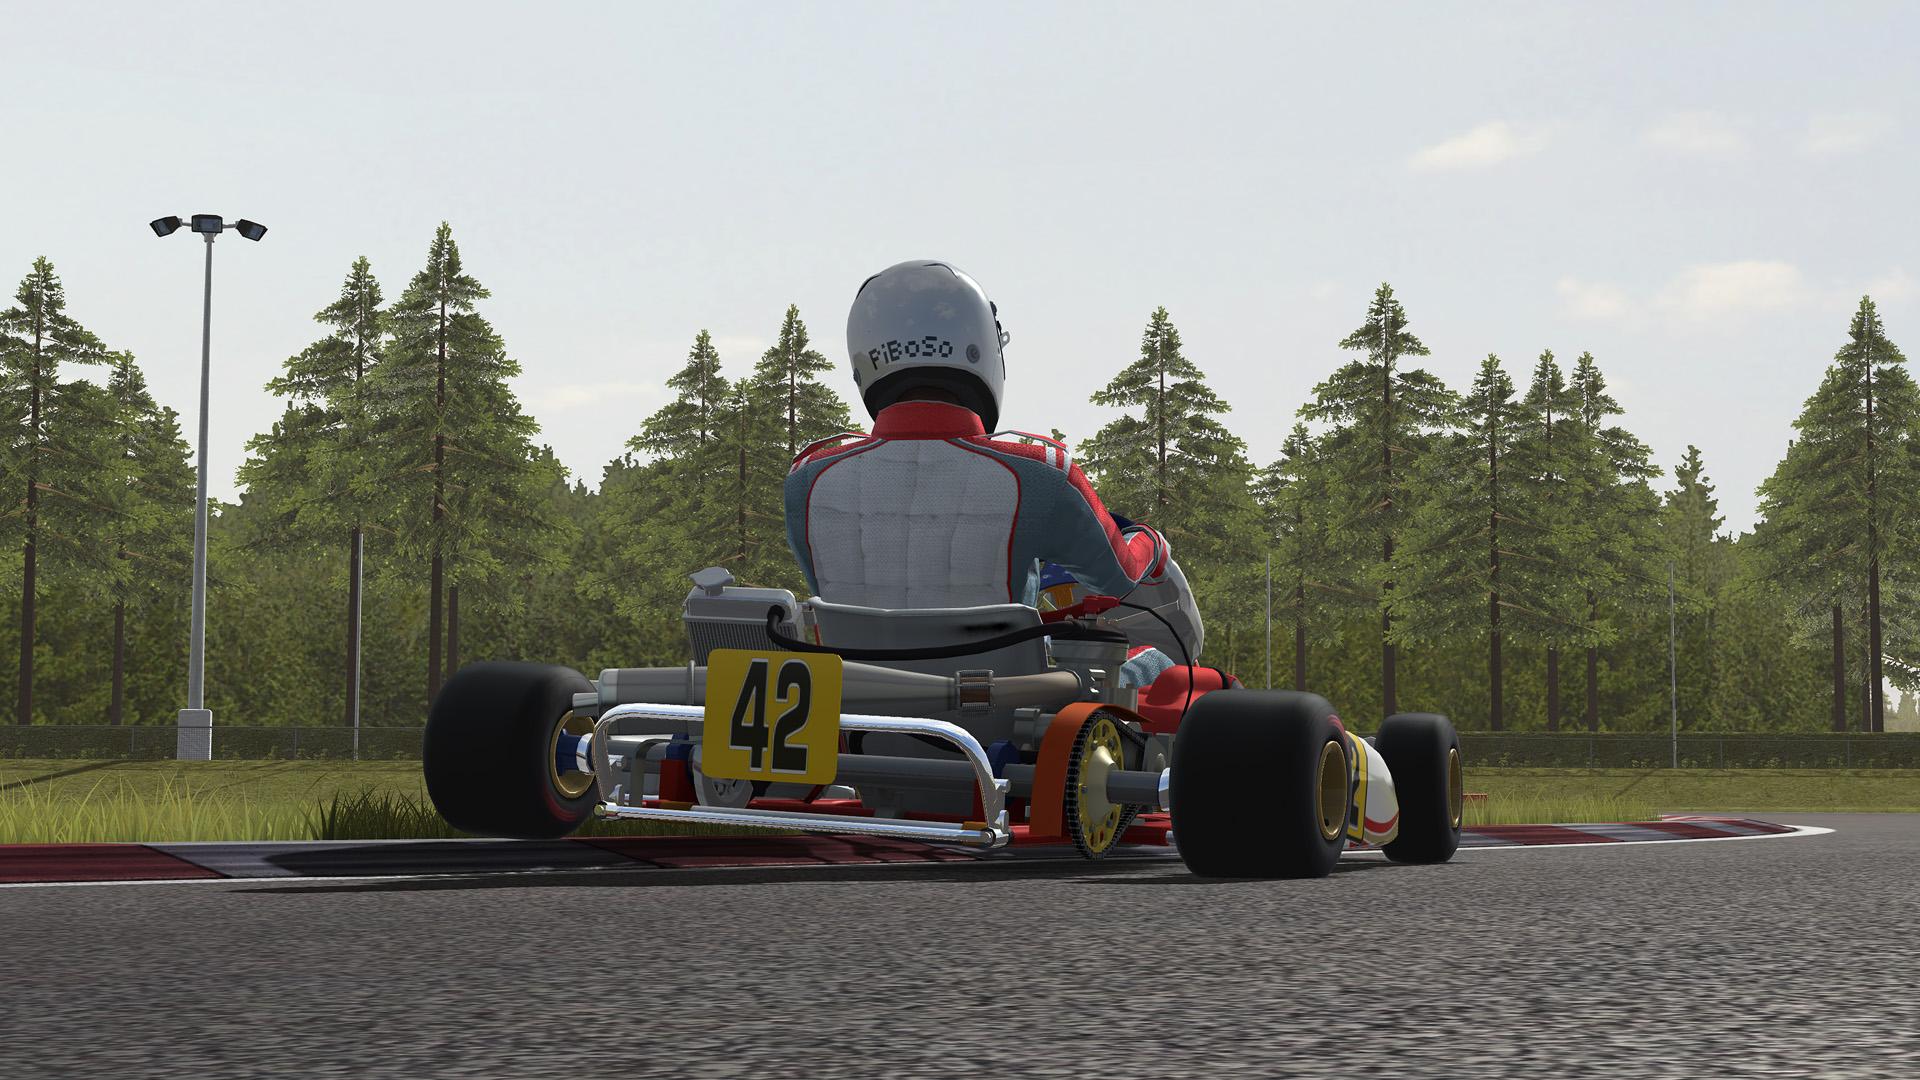 Screenshot №6 from game Kart Racing Pro